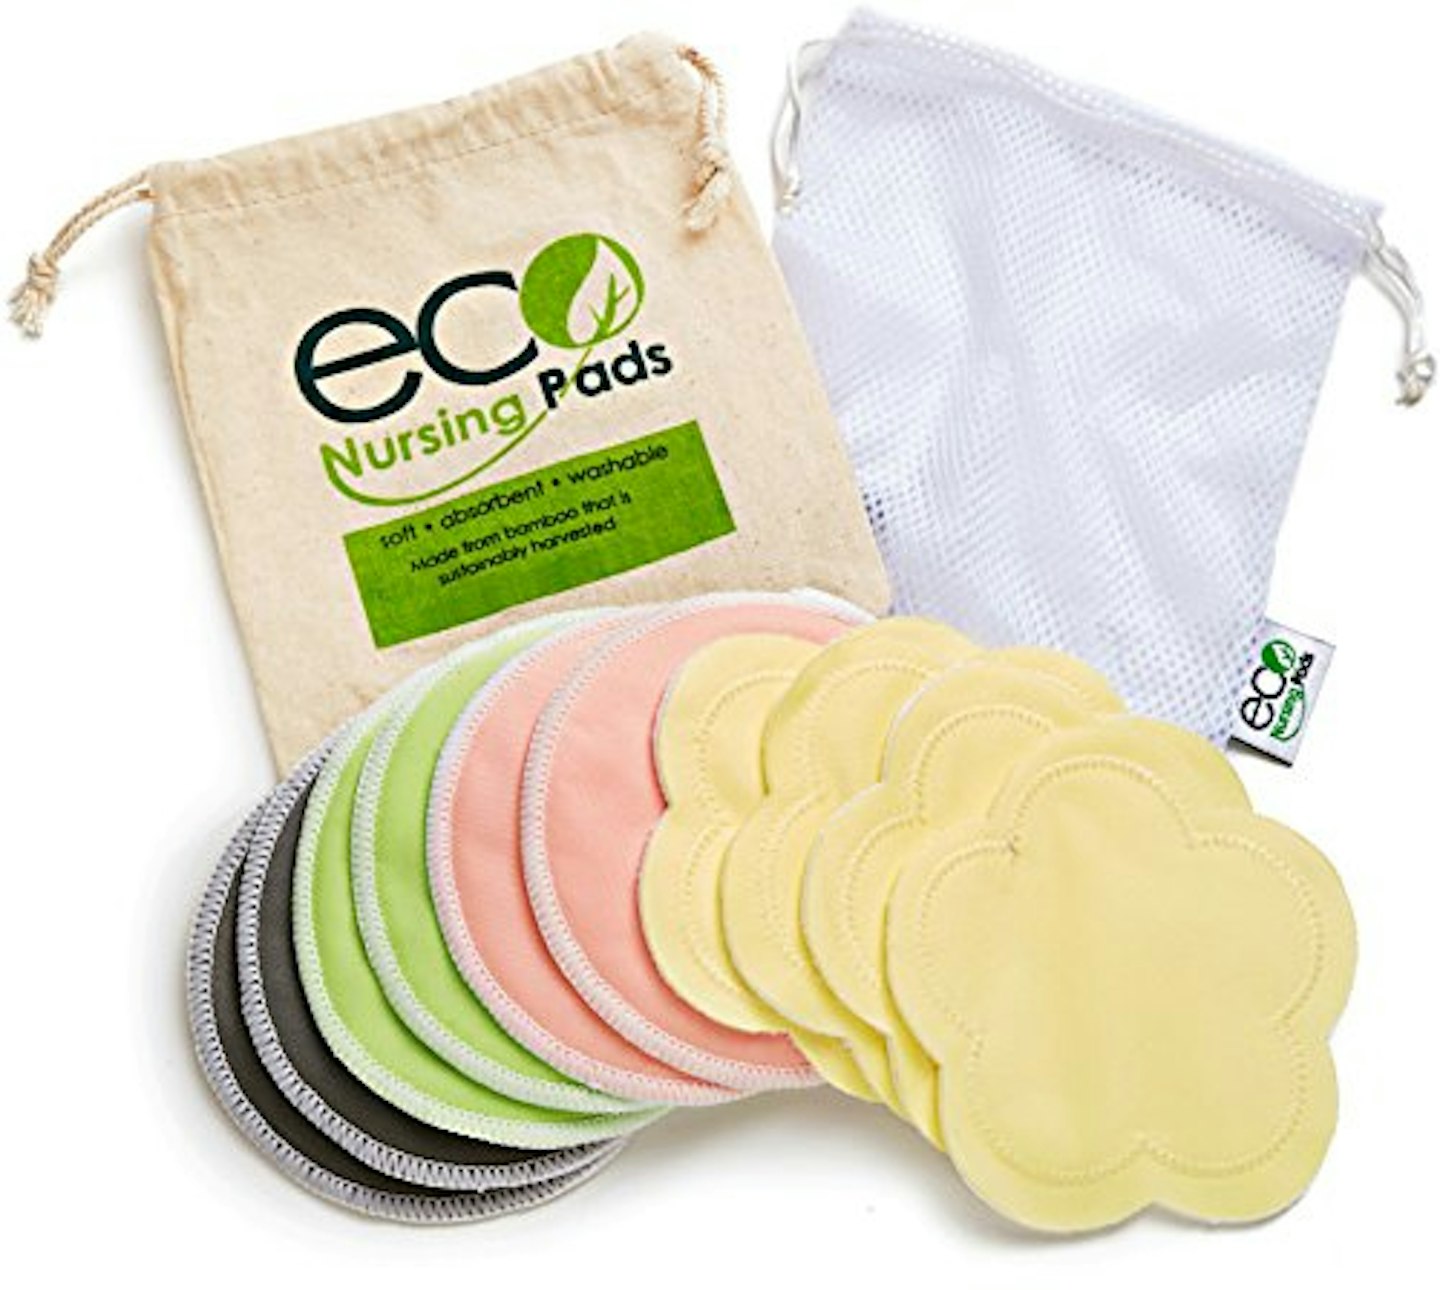 EcoNursingPads Washable Reusable Bamboo Nursing Pads